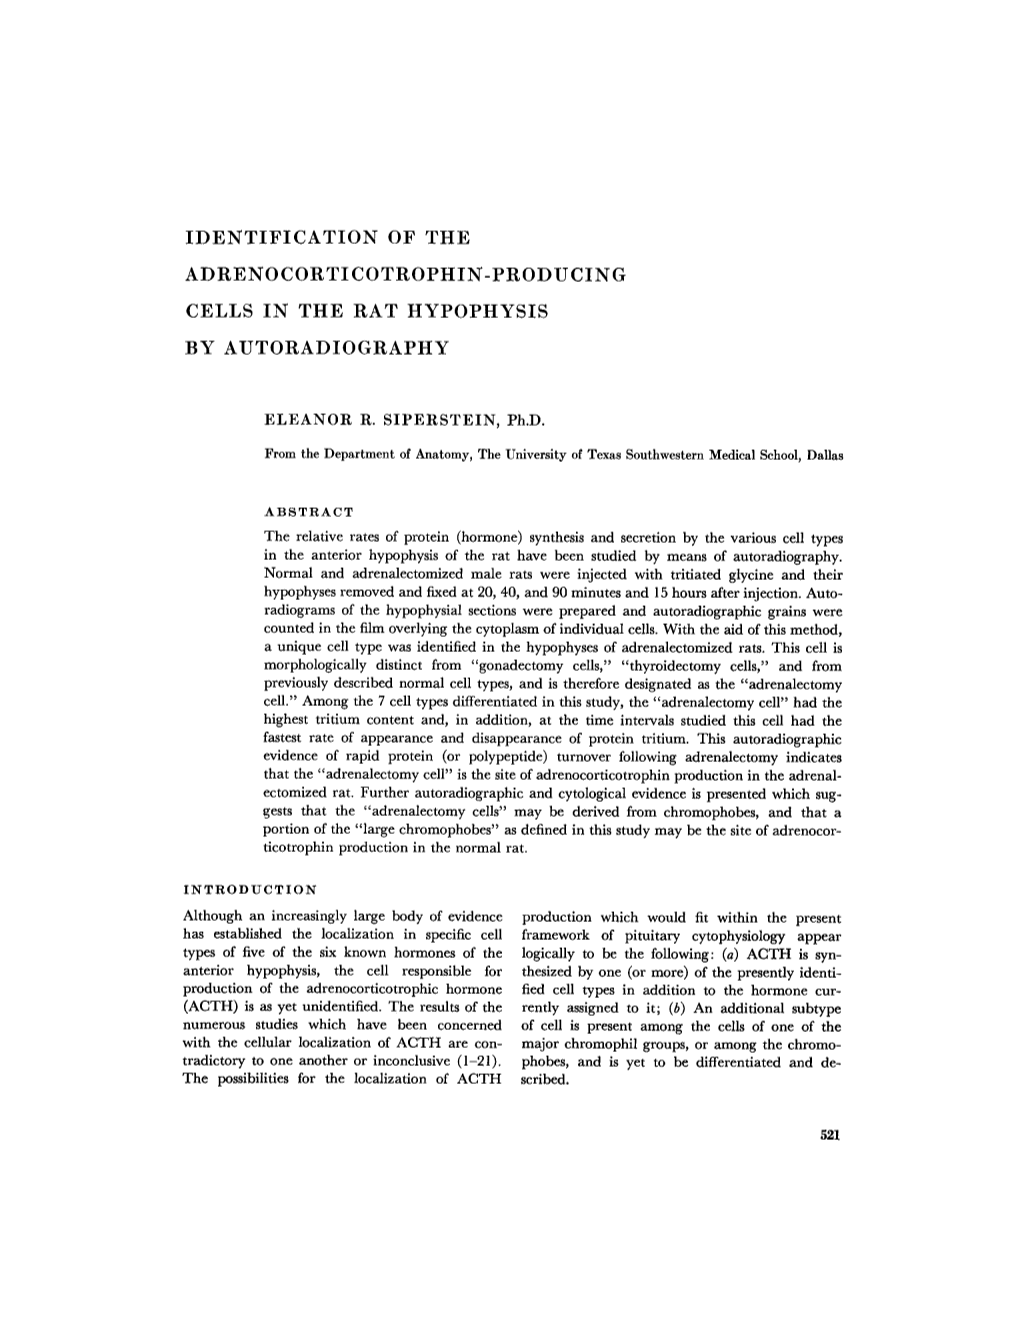 Identification of the Adrenocorticotrophin